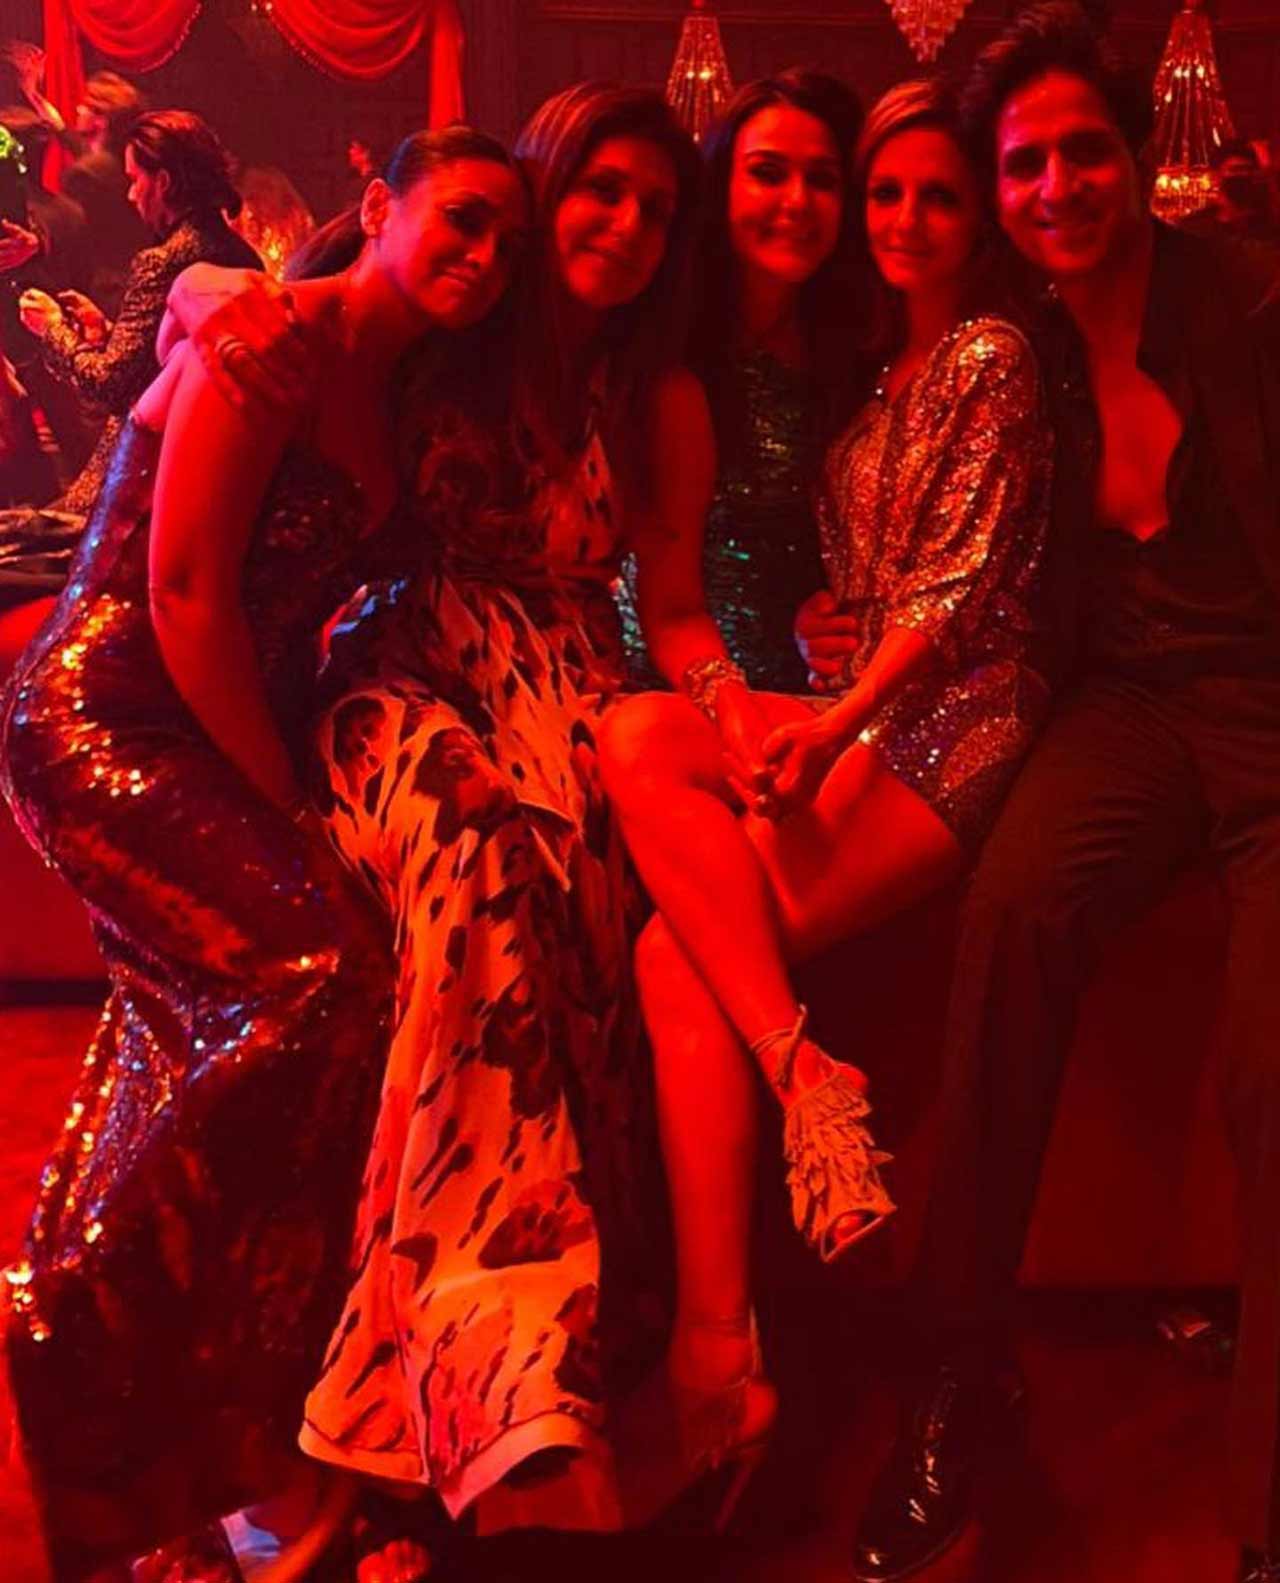 Anaita Shroff Adjania with Arslan Goni, Sussanne Khan, and Preity Zinta at Karan Johar's 50th birthday celebration.